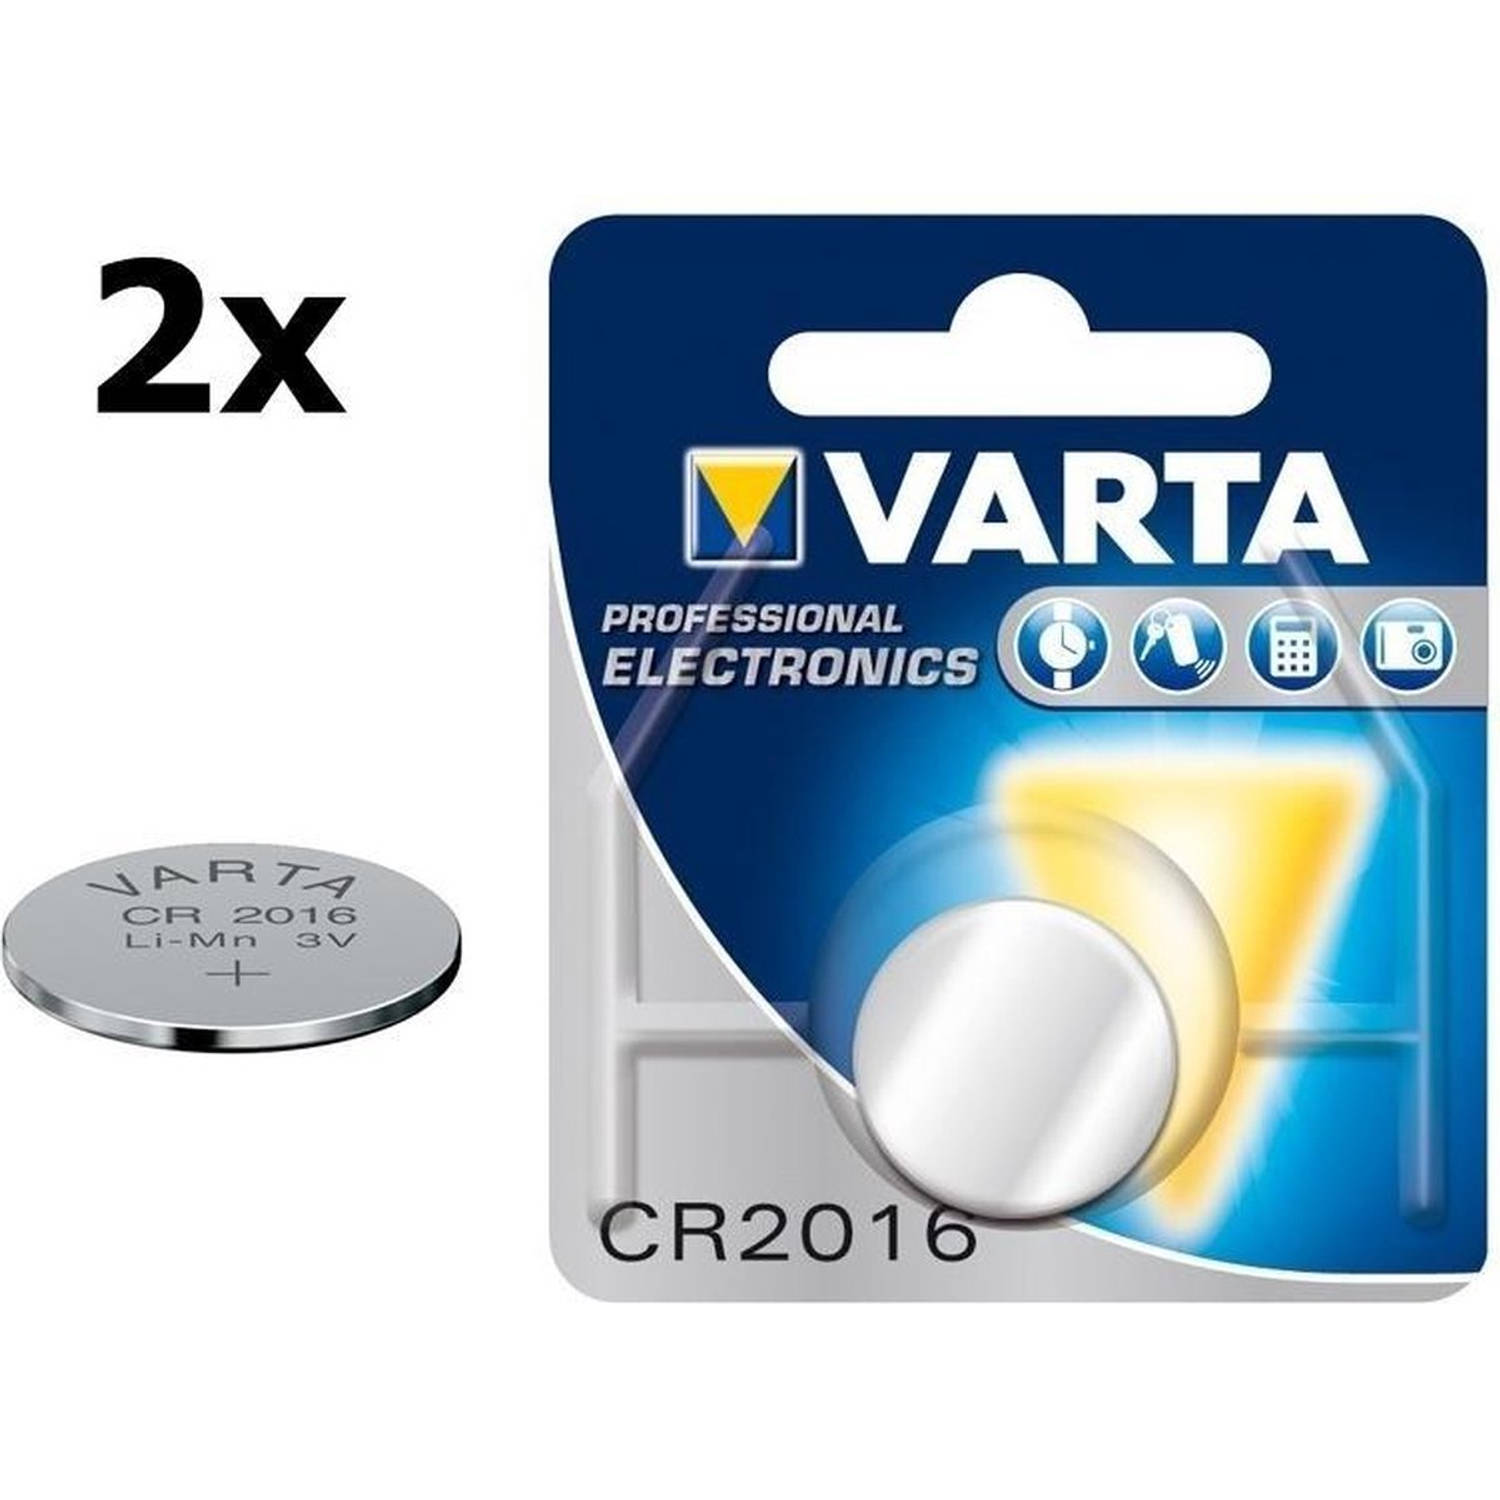 2 Stuks - Varta CR2016 Professional Electronics 3V 90mAh Lithium knoopcel